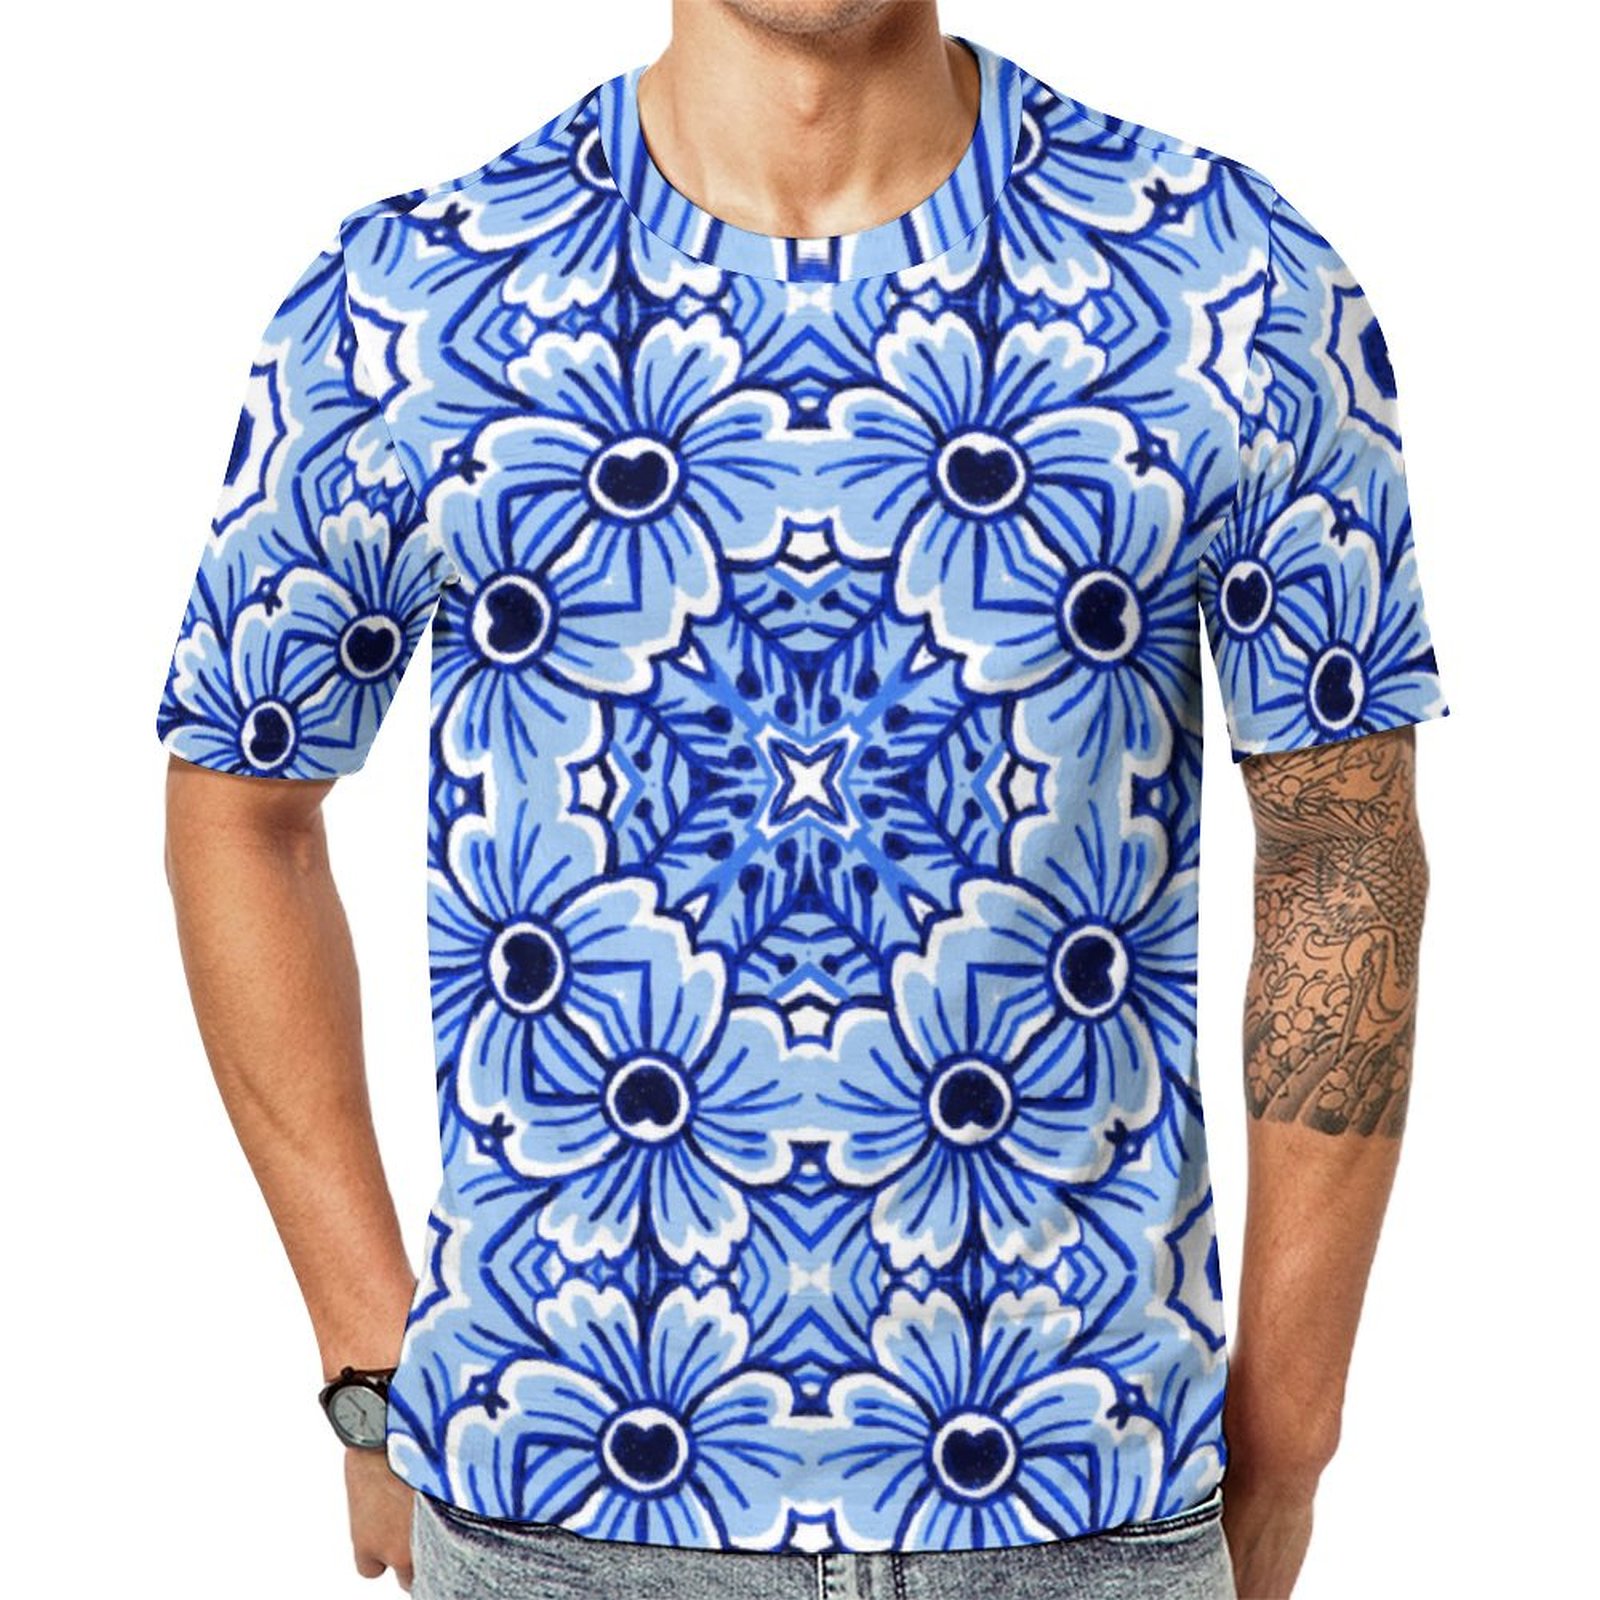 Elegant Antique Dutch Delft Blue Floral Short Sleeve Print Unisex Tshirt Summer Casual Tees for Men and Women Coolcoshirts